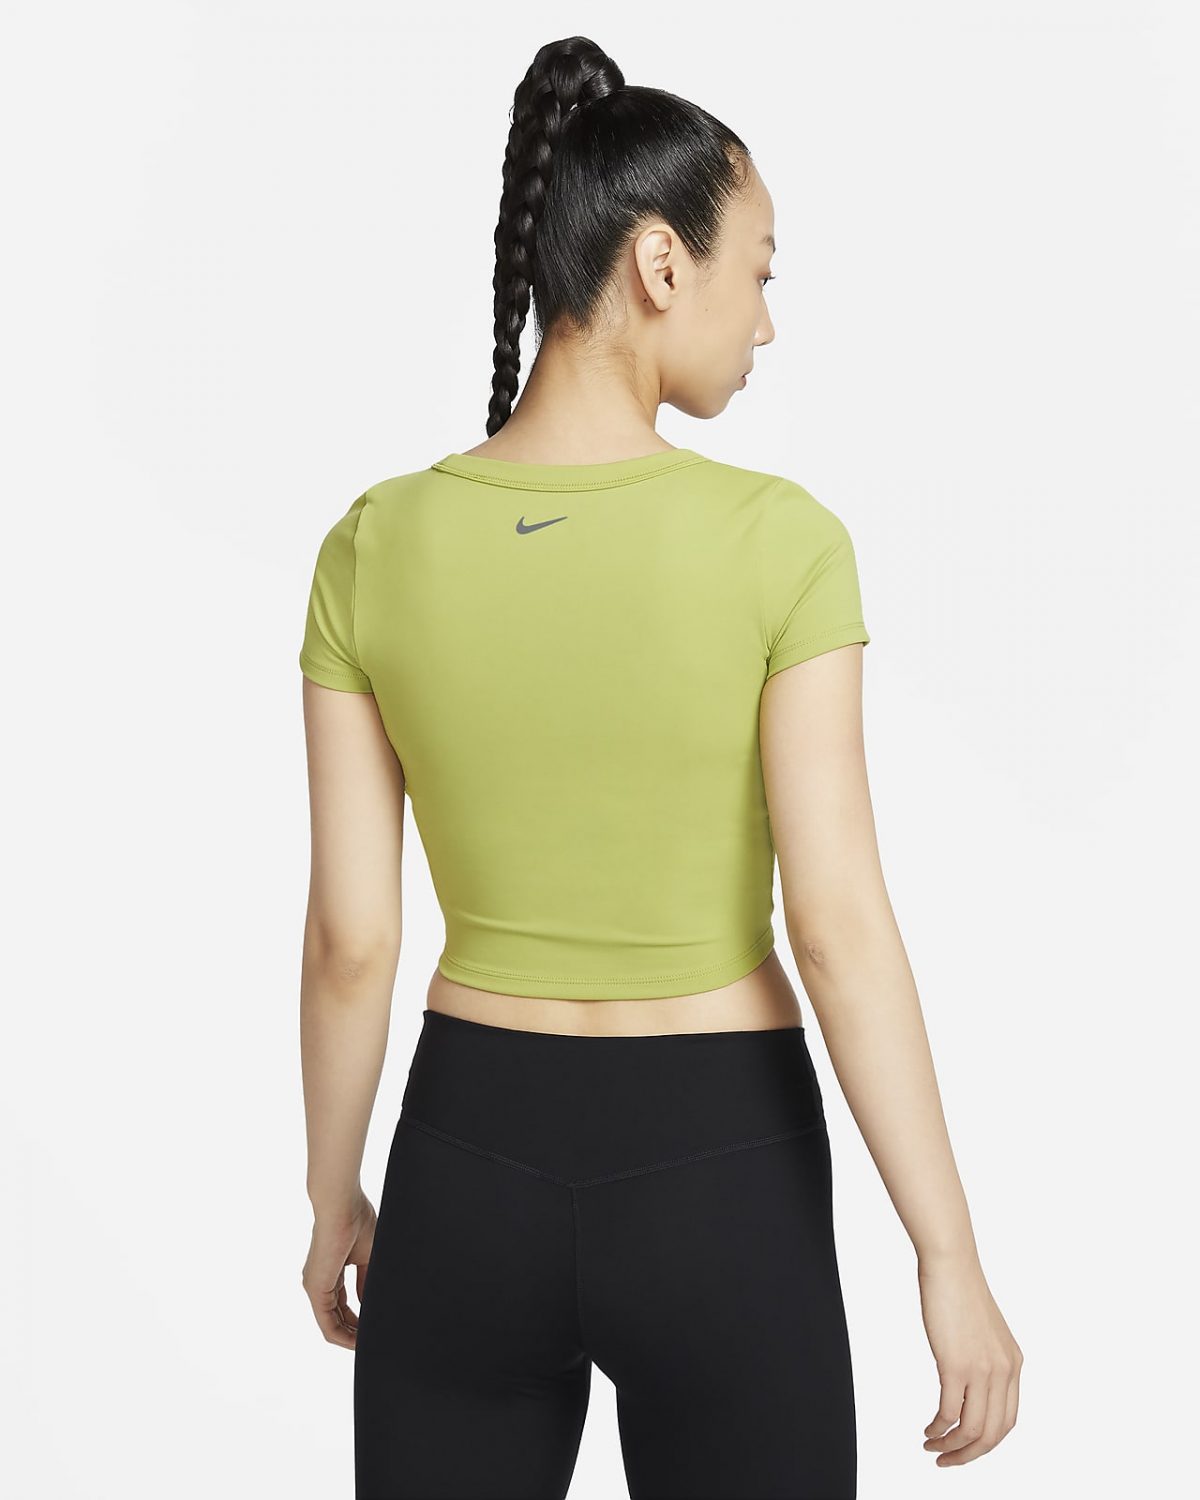 Женский топ Nike One Fitted черный фотография